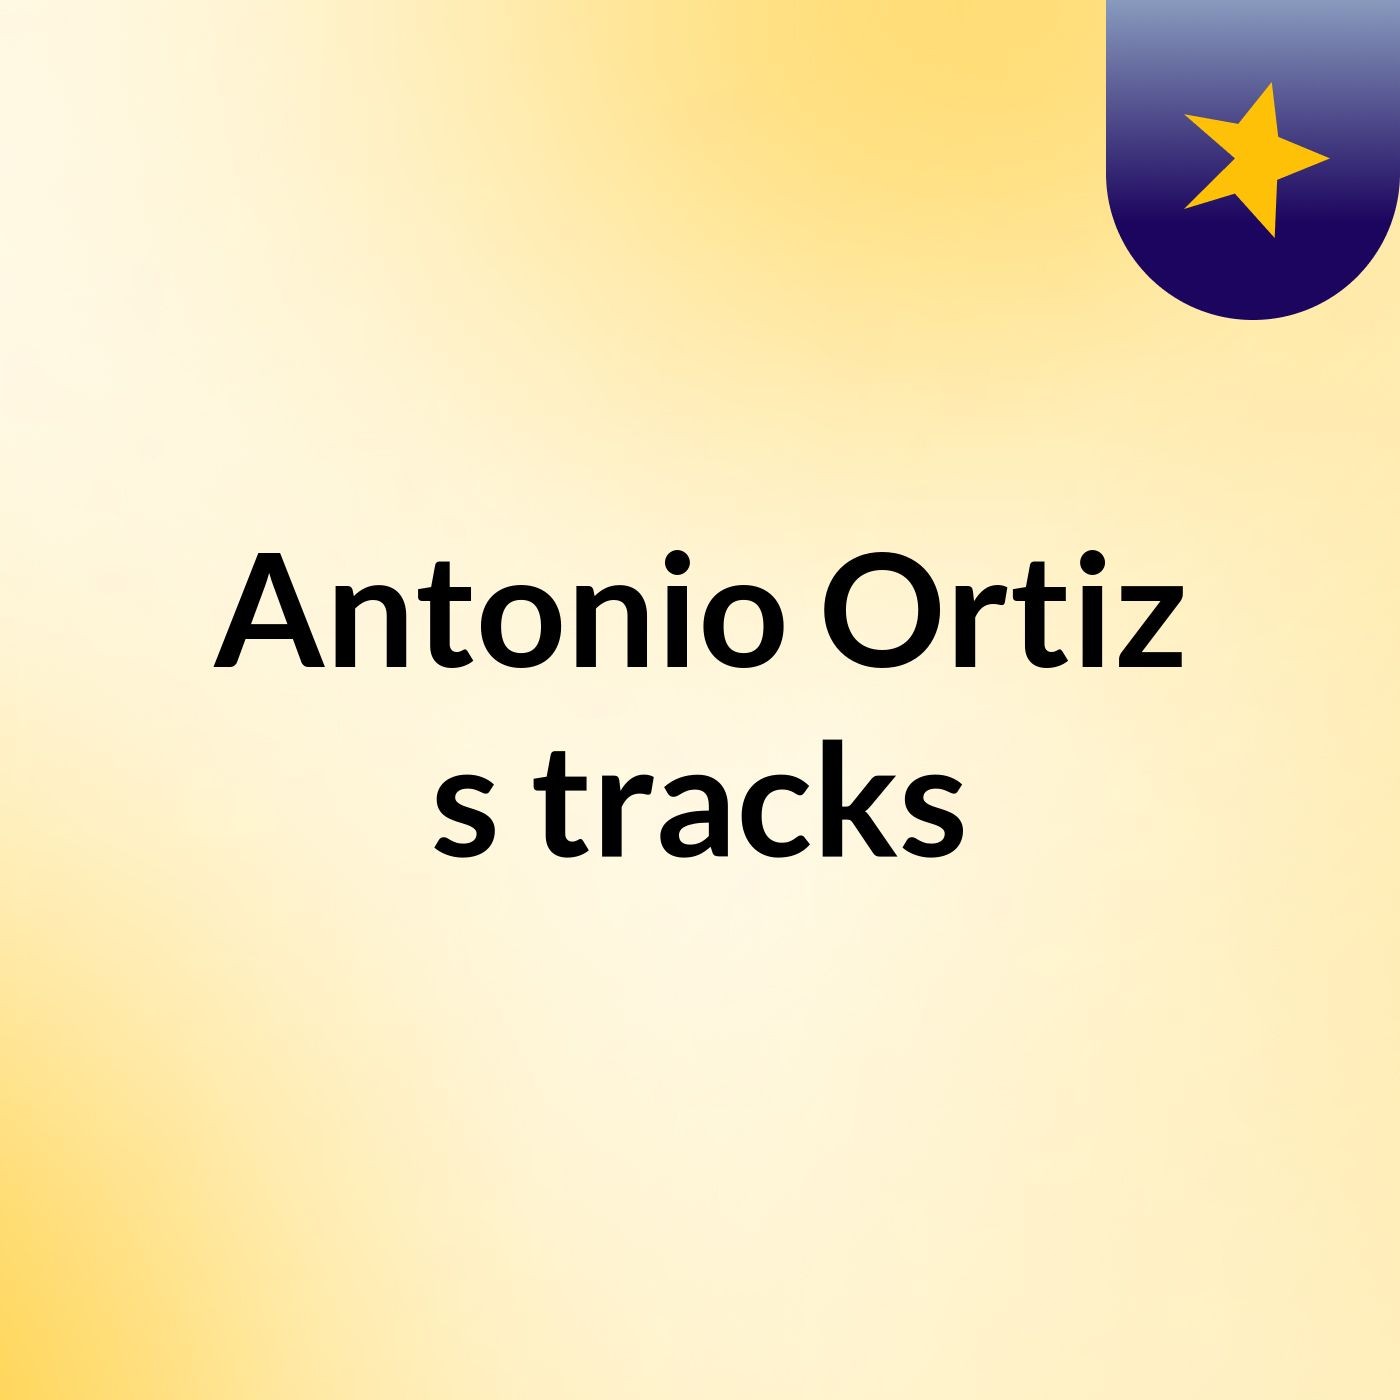 Antonio Ortiz's tracks